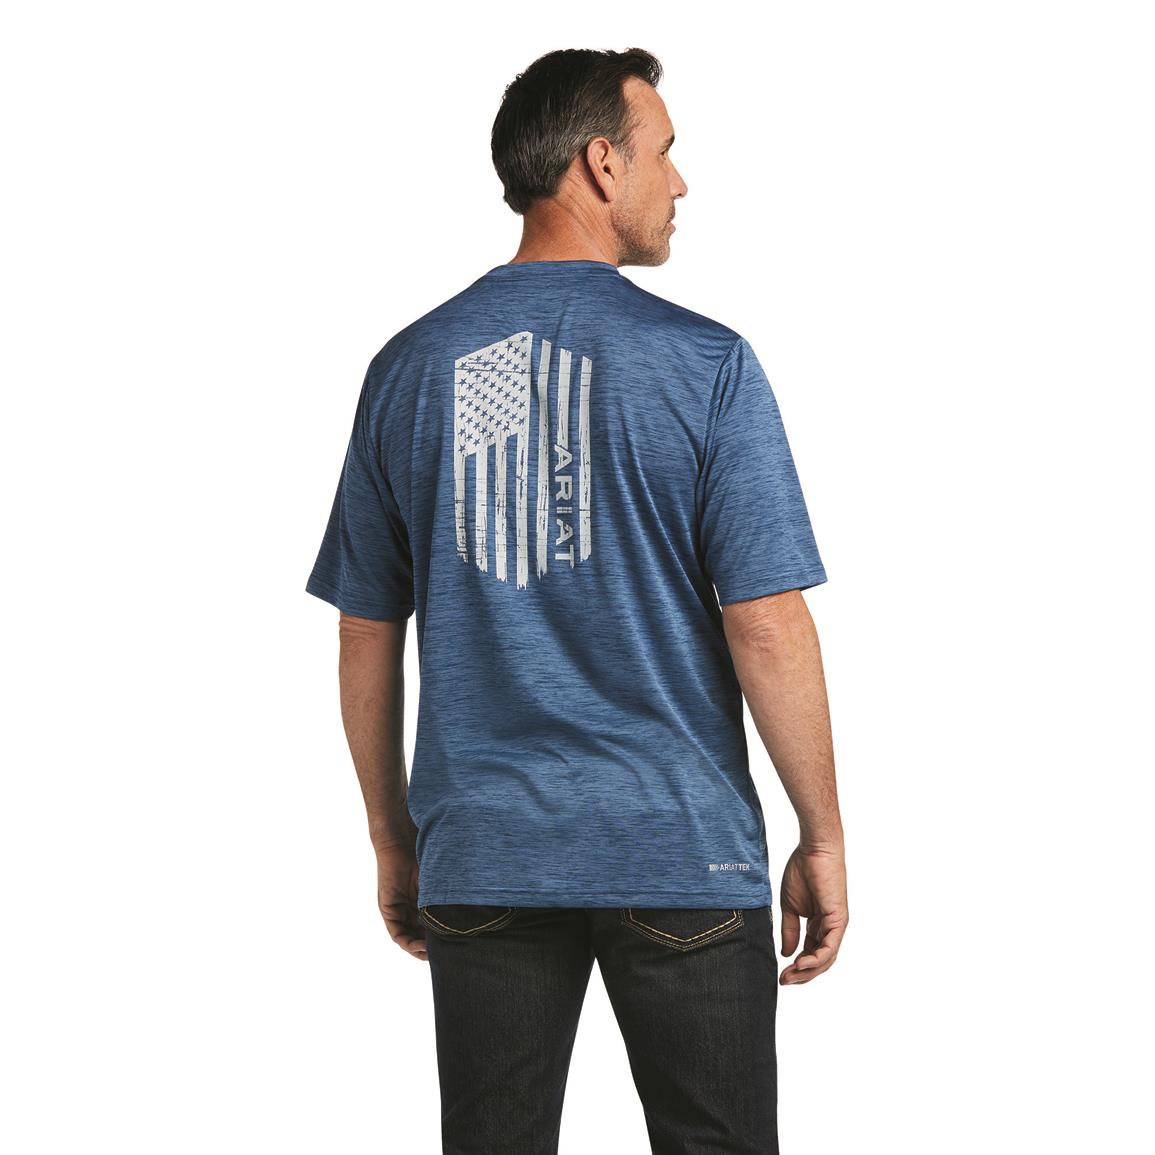 Guide Gear Men's Insect Shield Performance Quarter-zip Shirt - 715434 ...